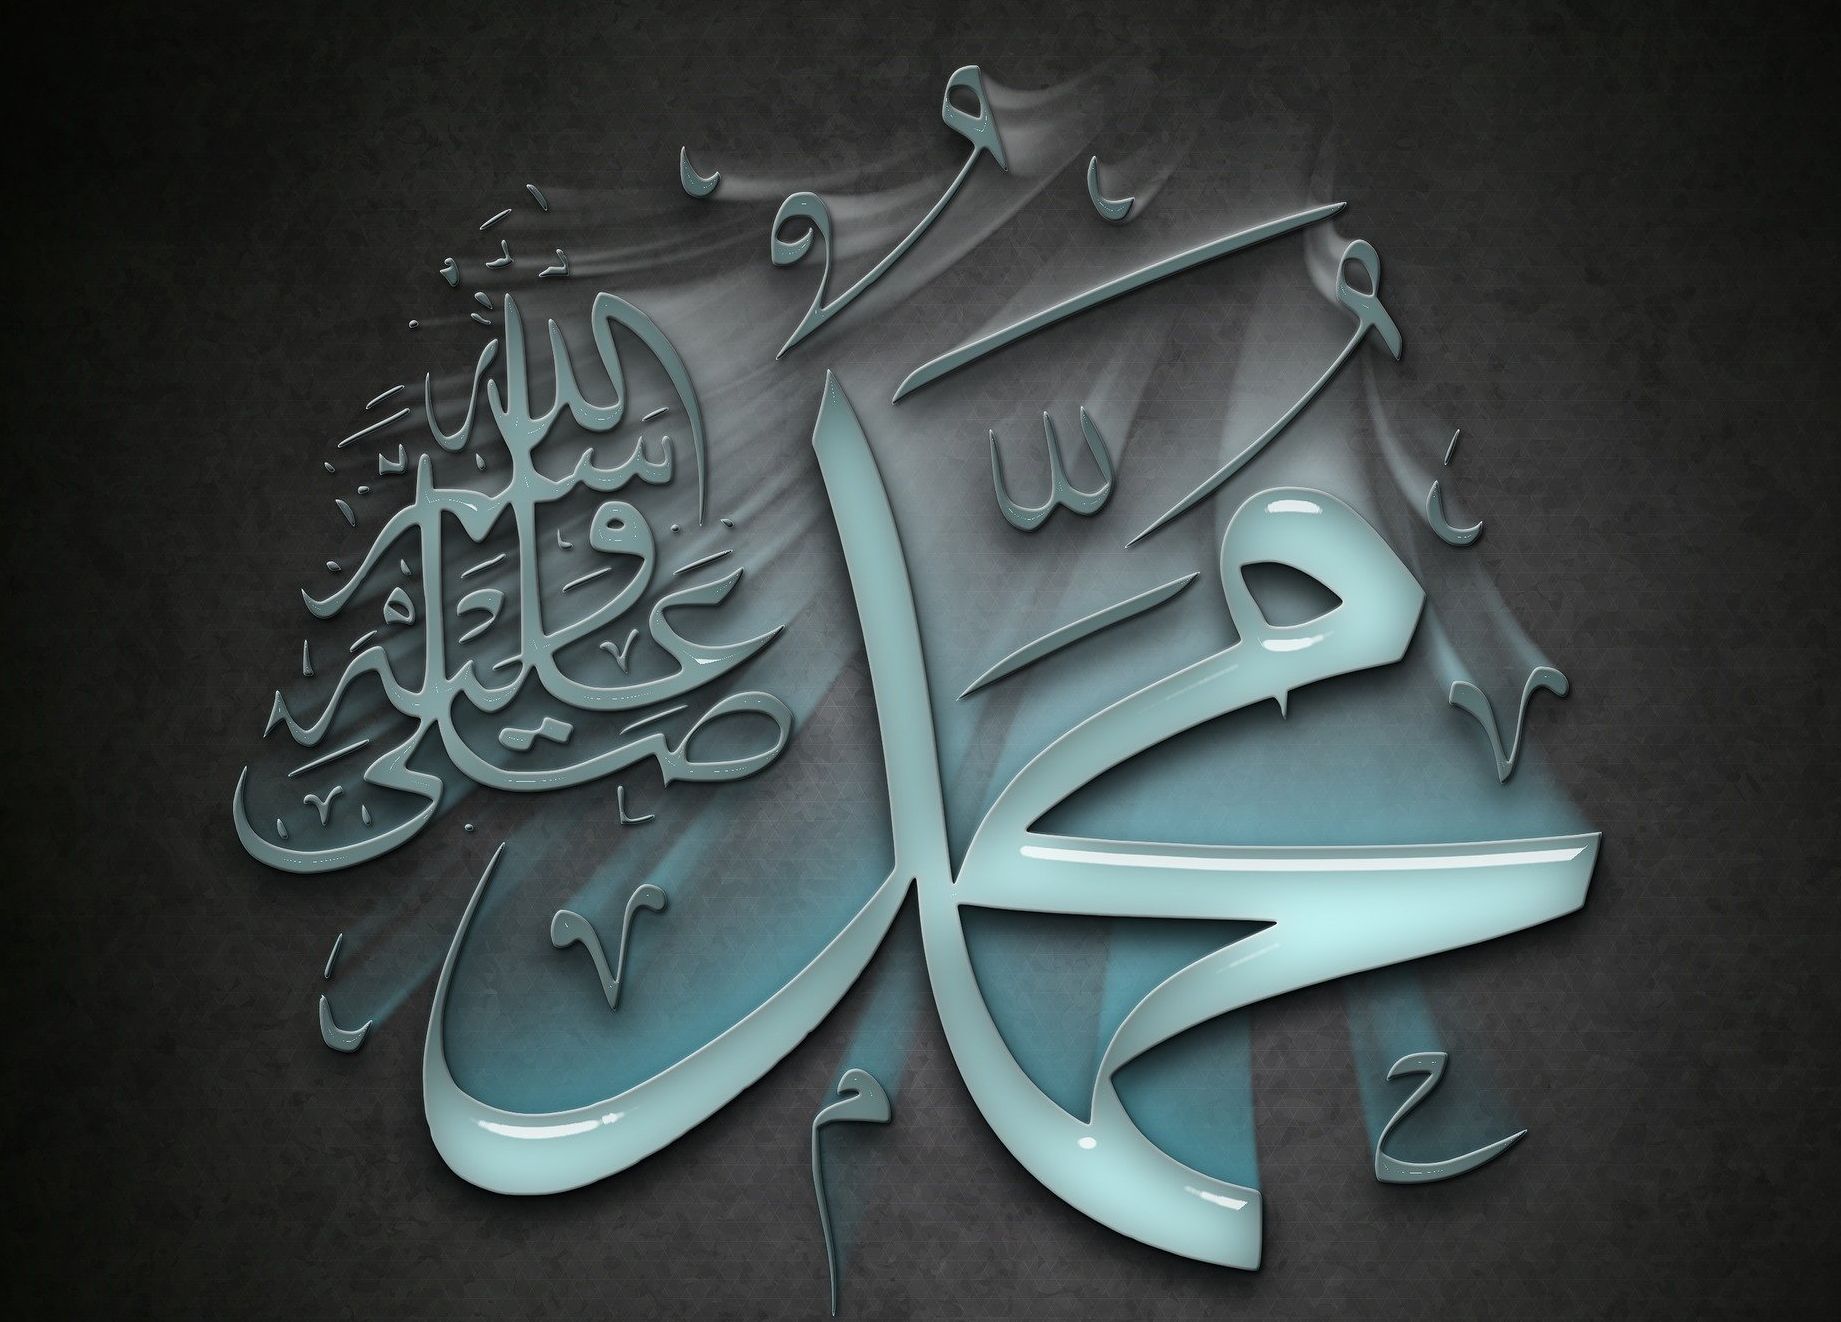 Нашид я наби. Мухаммад на арабском надпись. Пророк Мухаммад на арабском. Muhammad s a w.